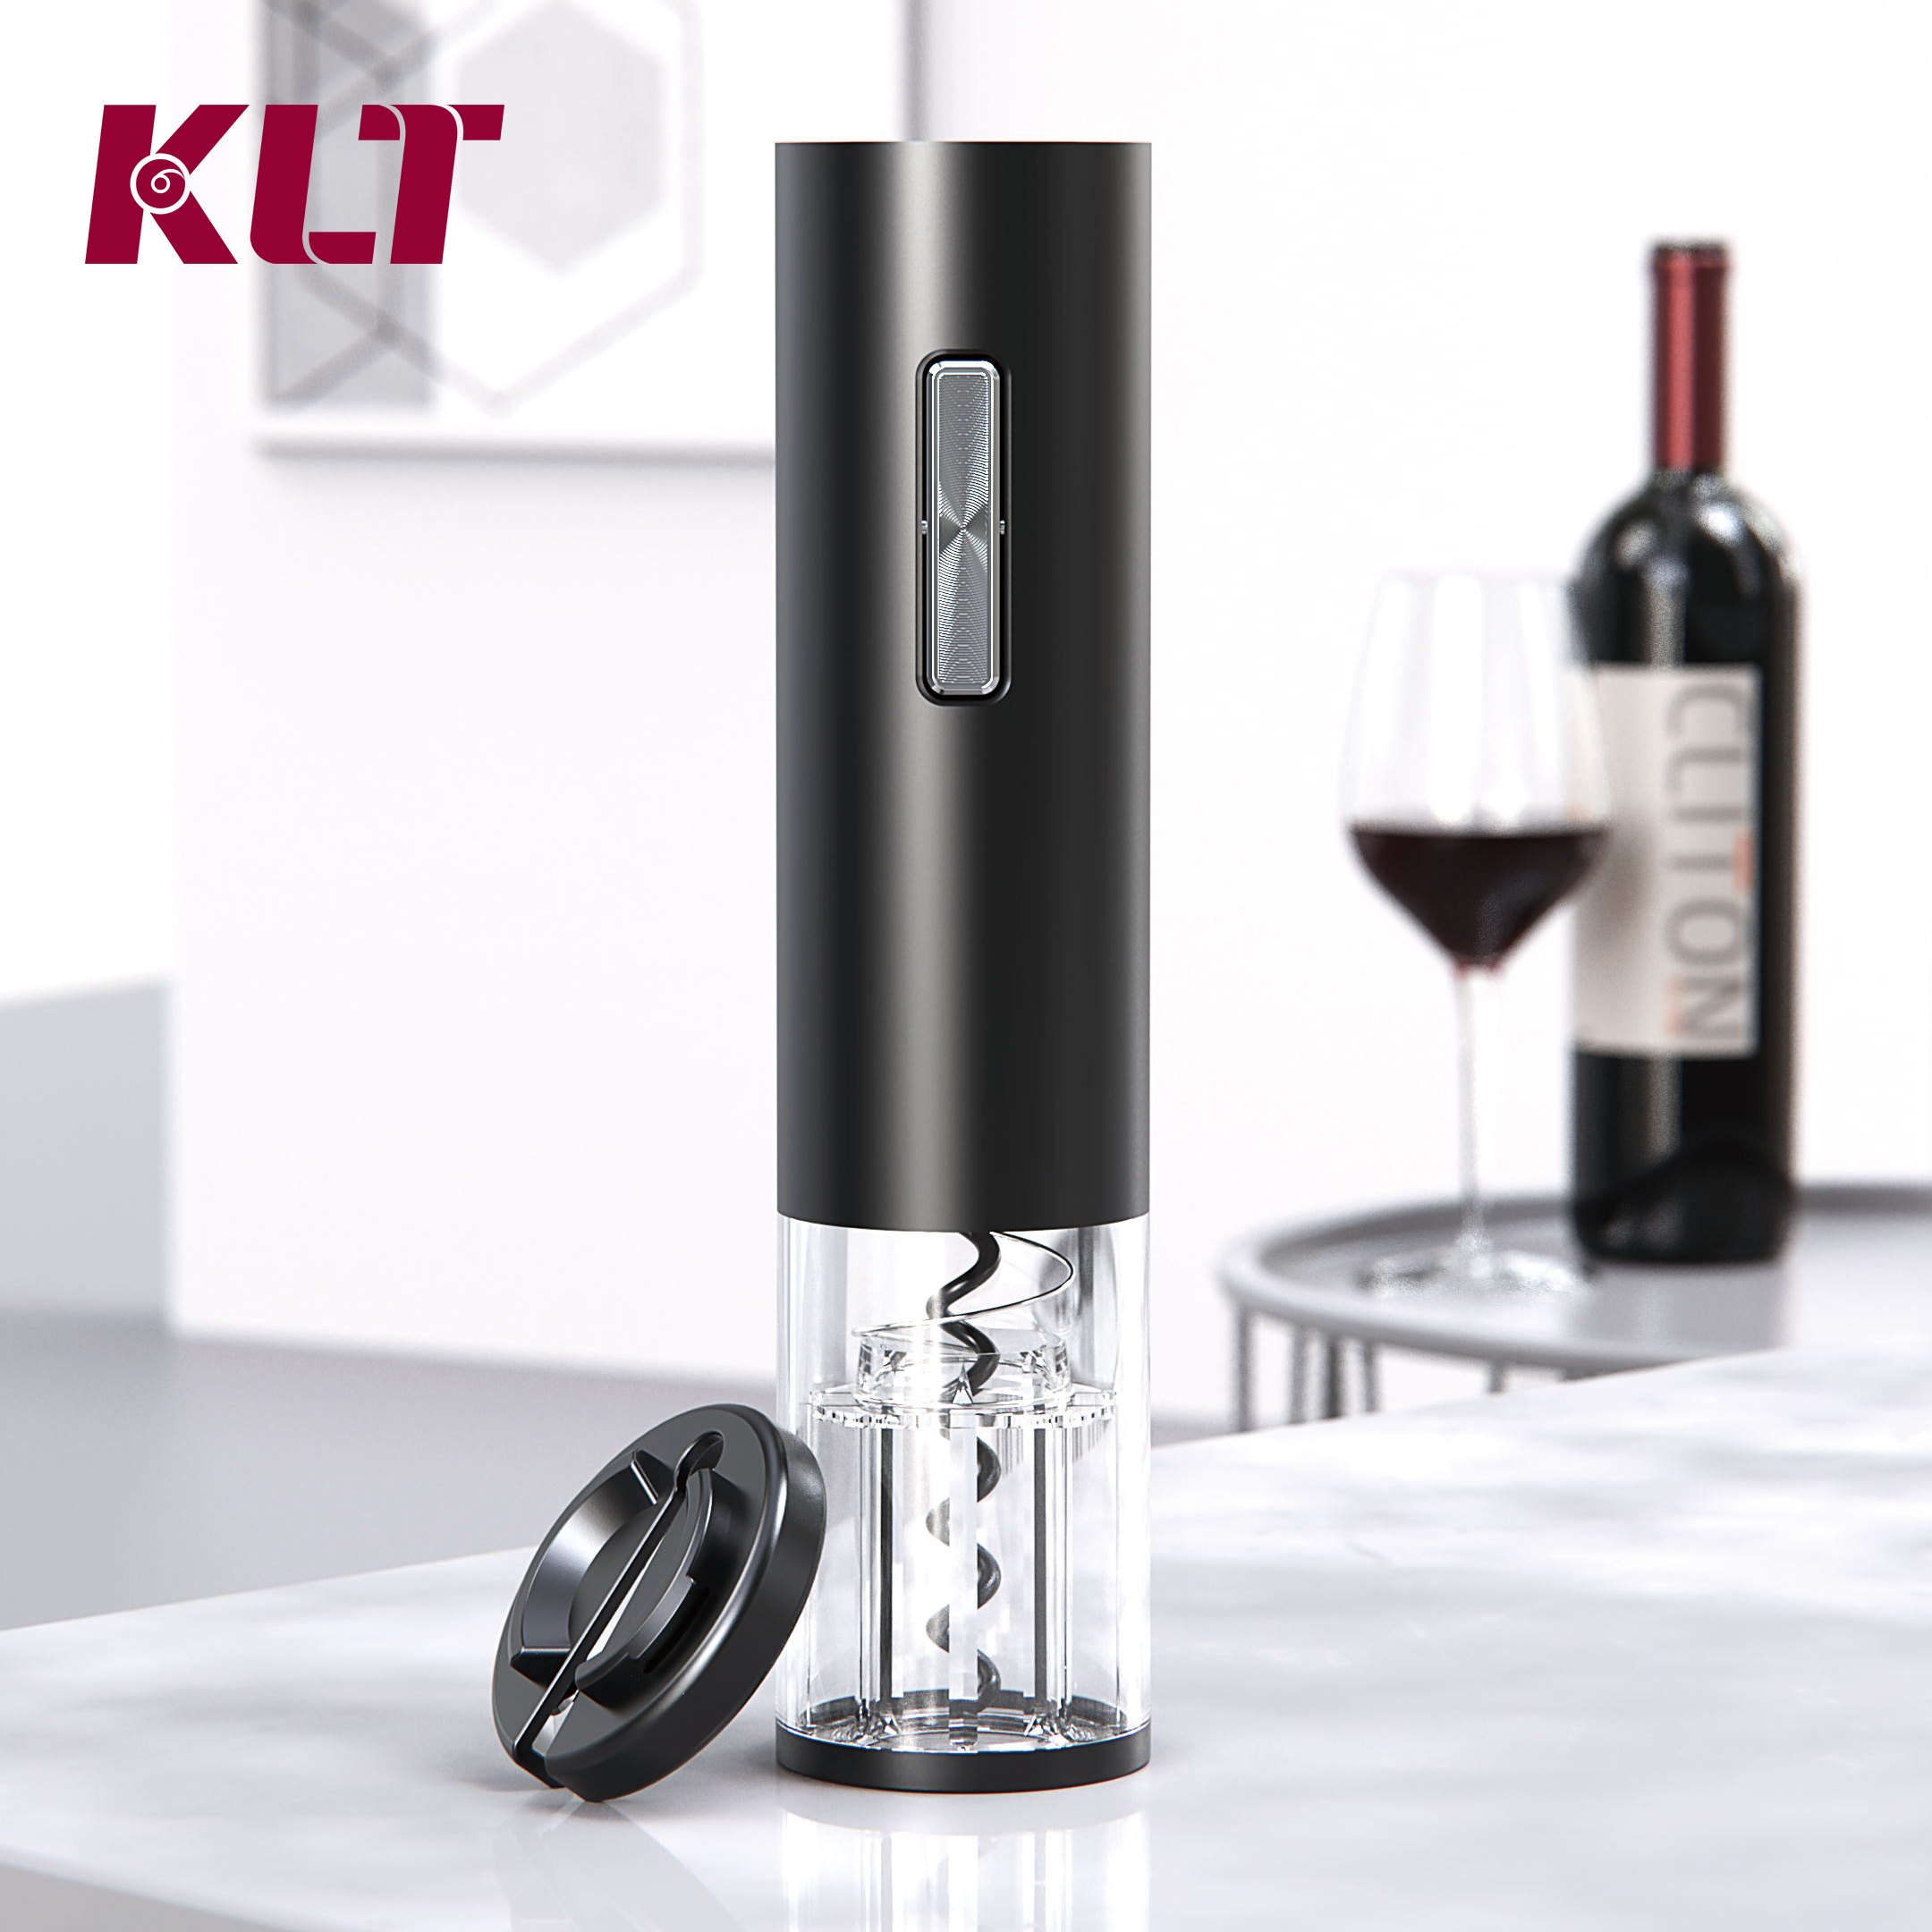 Rechargeable Electric Wine Opener KP3-362002